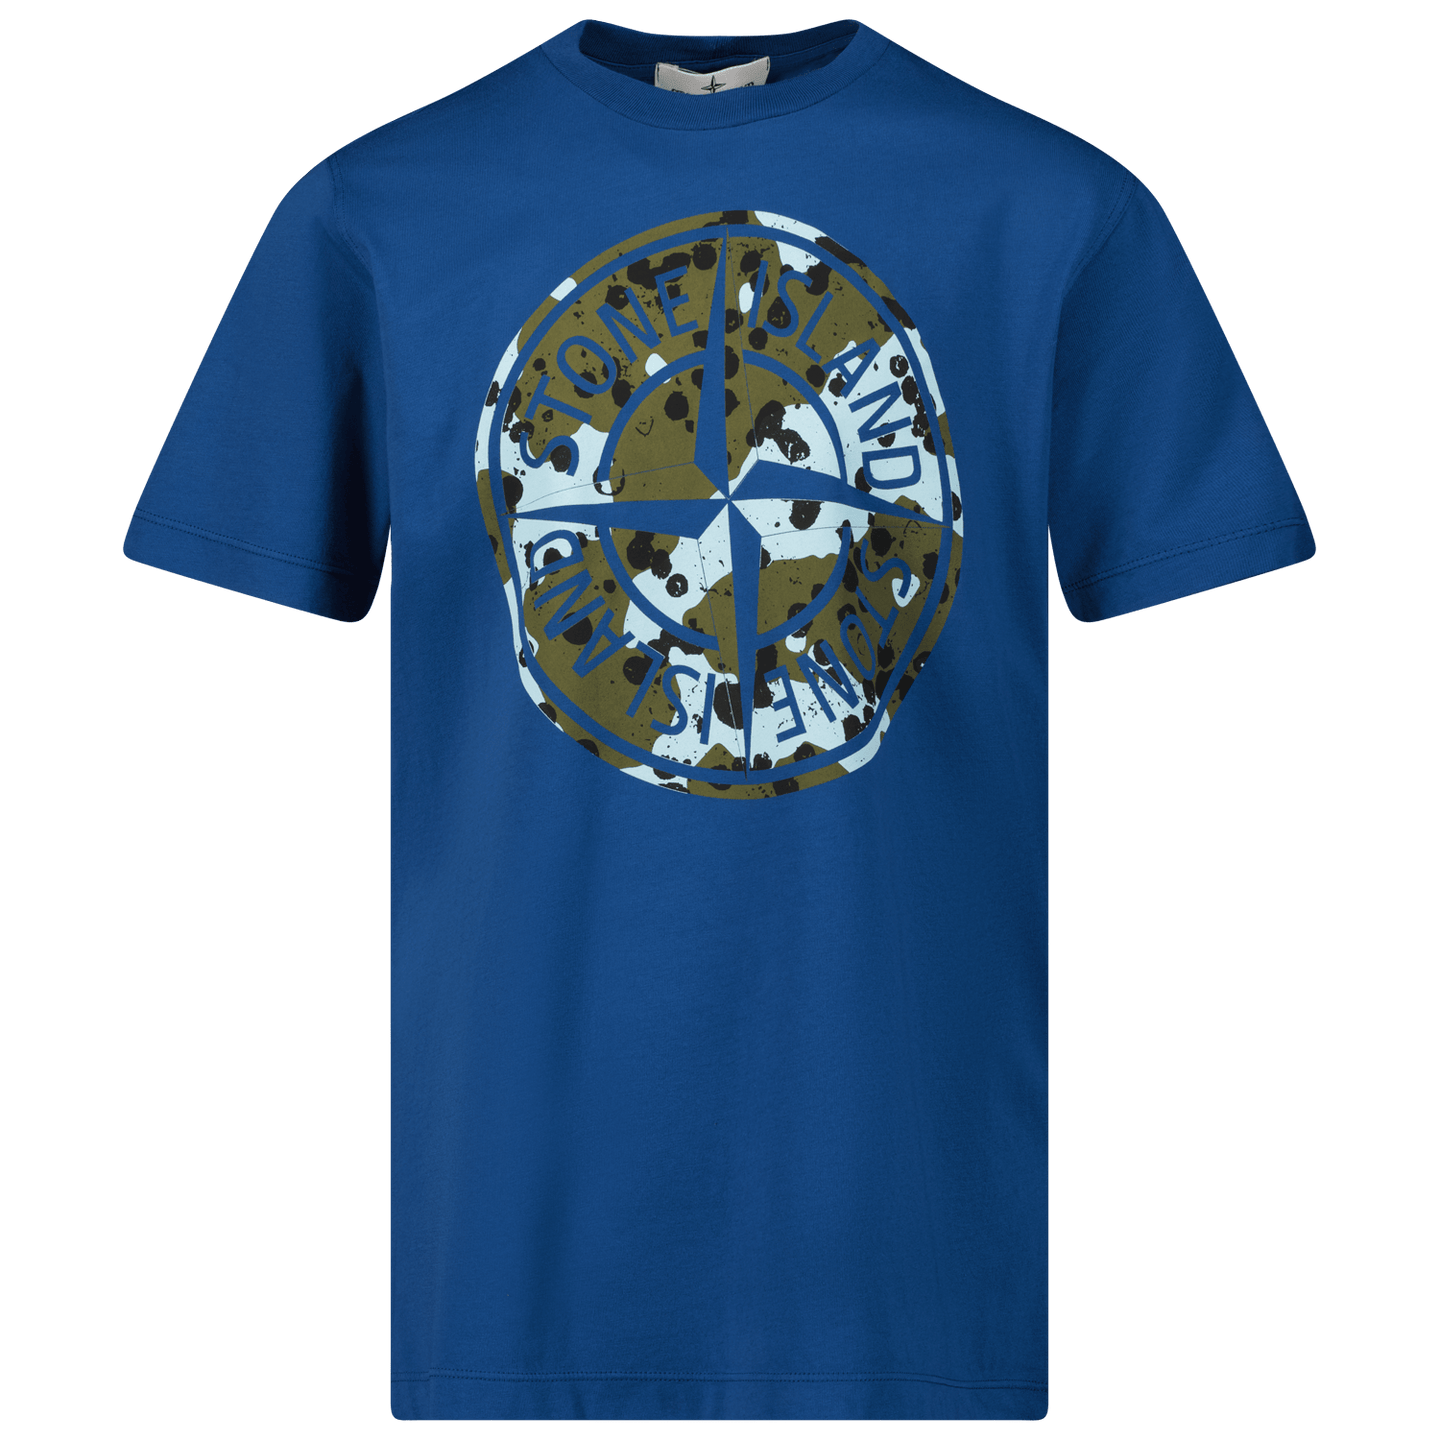 Stone Island Kinder Jongens T-Shirt Blauw - Superstellar